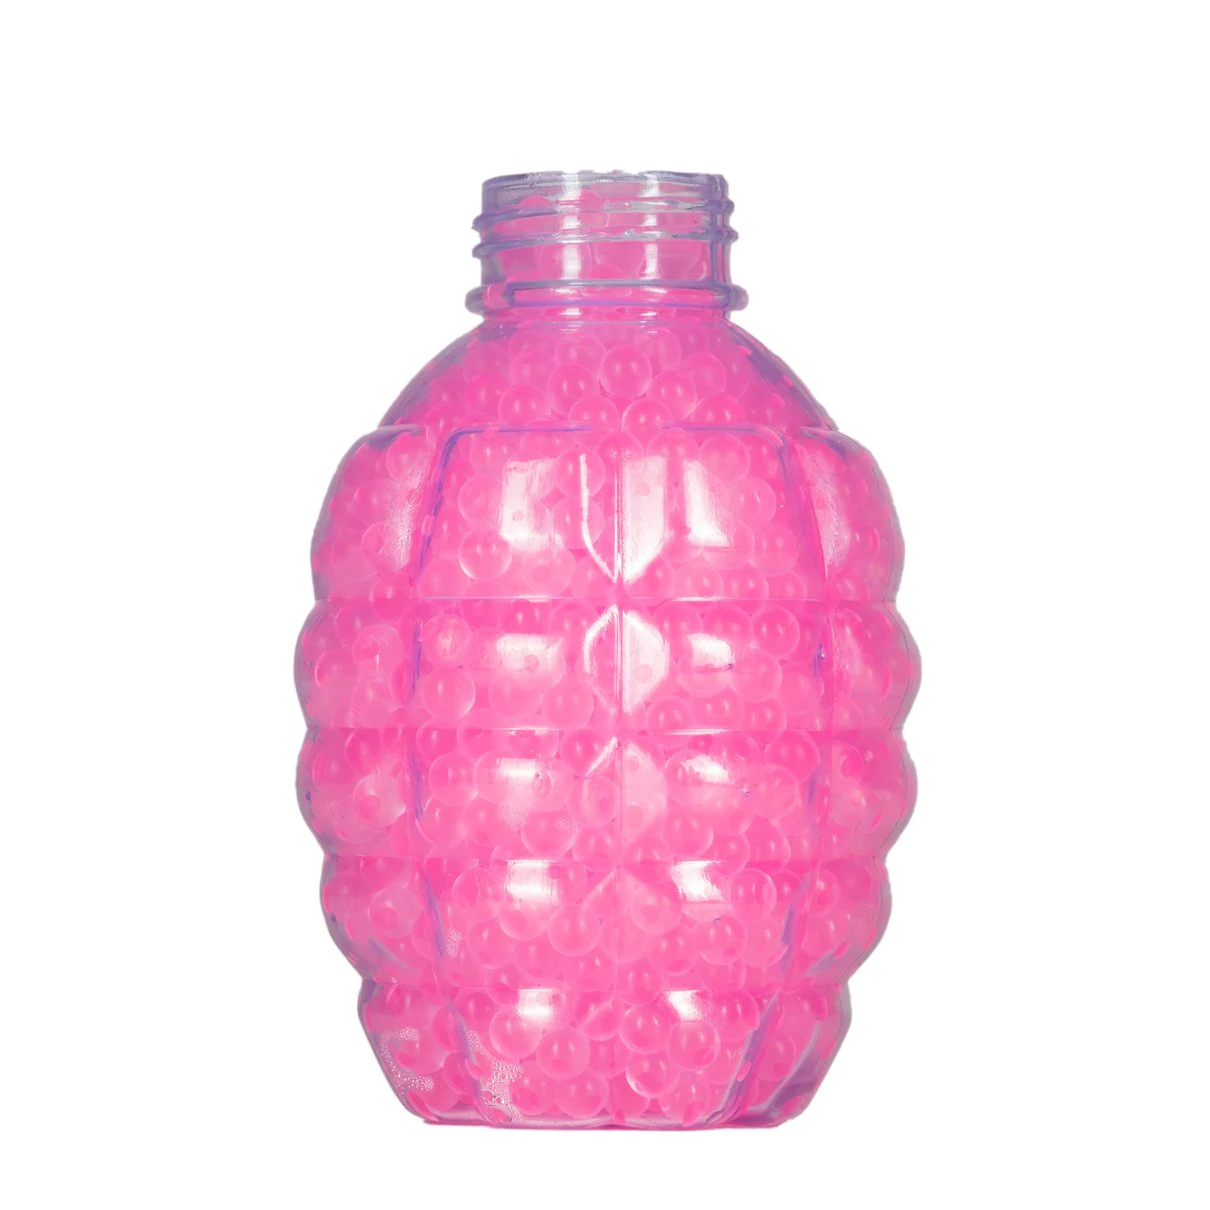 GelStrike Gelballs / Gellets Pro Formula 20.000 st Pink